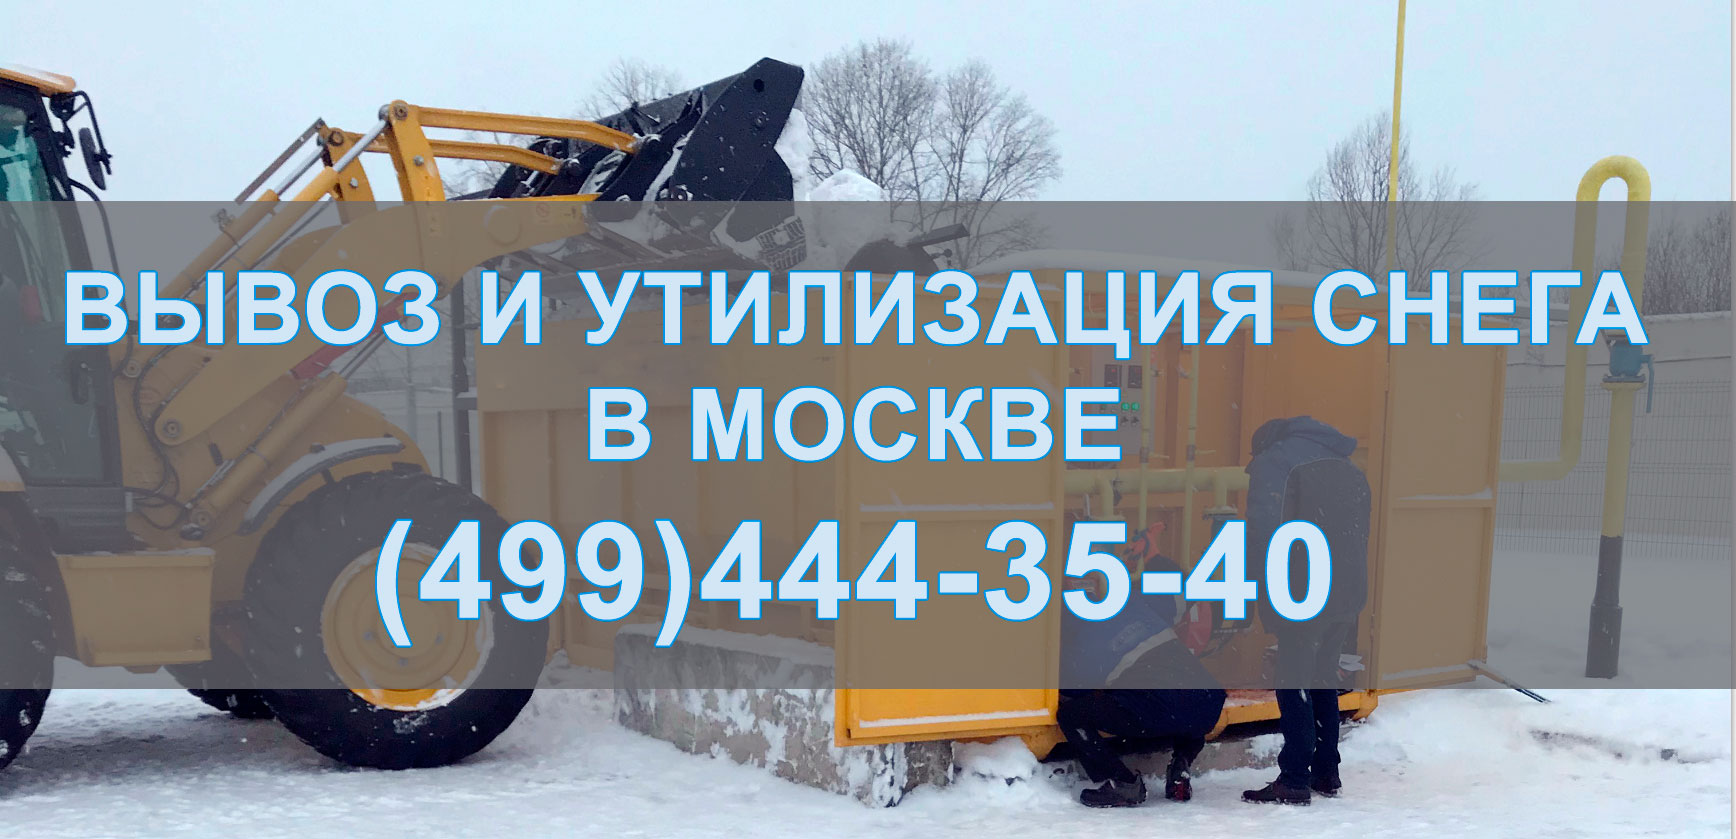 Услуги по вывозу снега от 450 рублей